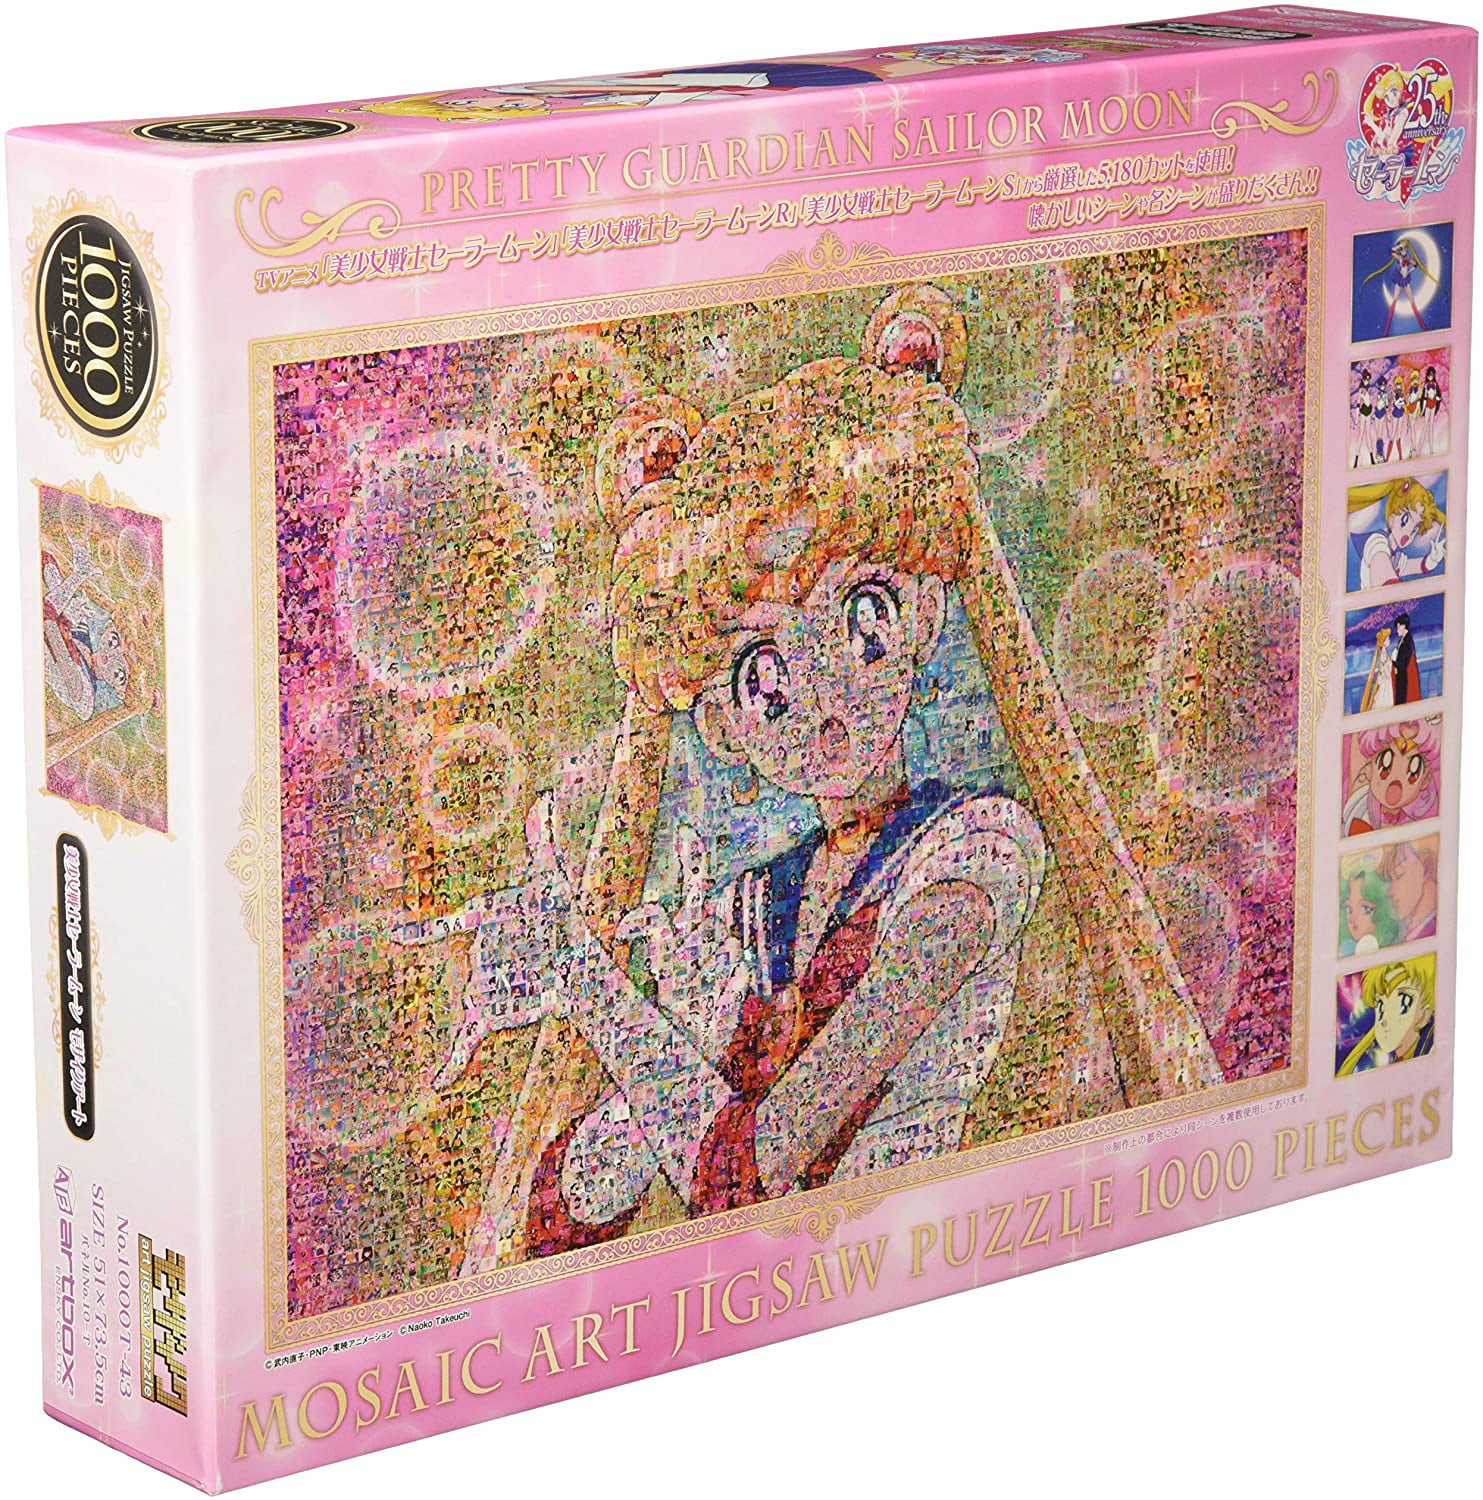 Sailor Moon Jigsaw Puzzle Pretty Guardian Sailor Moon Mosaic Art 1000 Pieces 